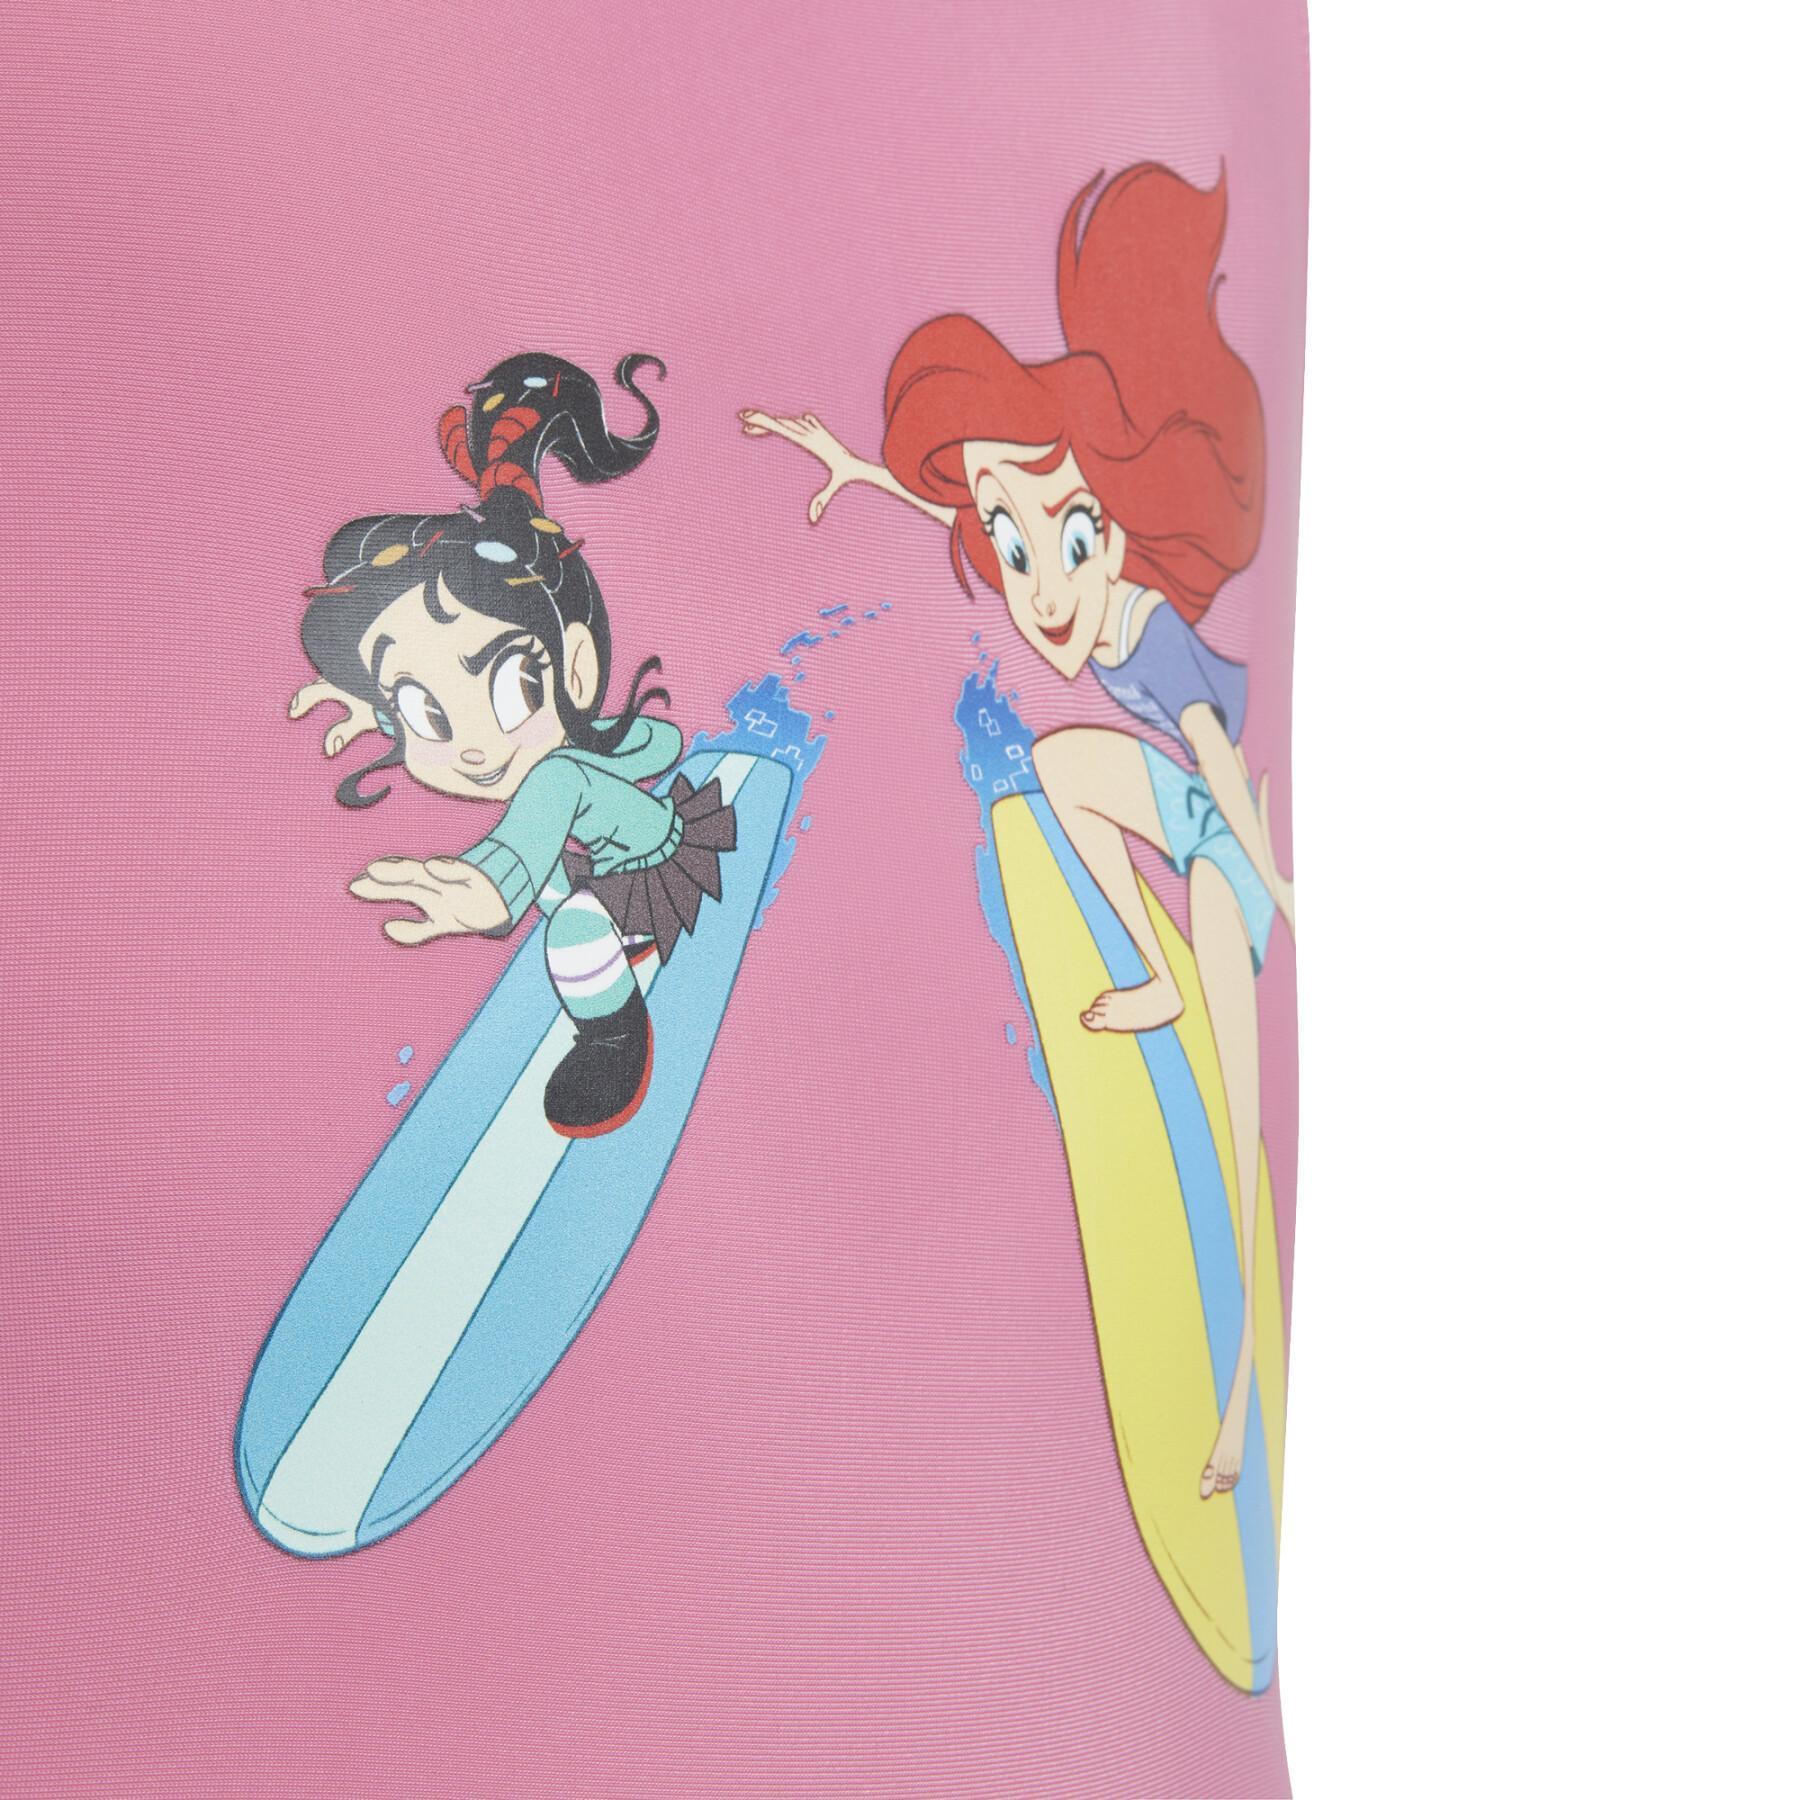 Children's swimsuit adidas Disney Princess